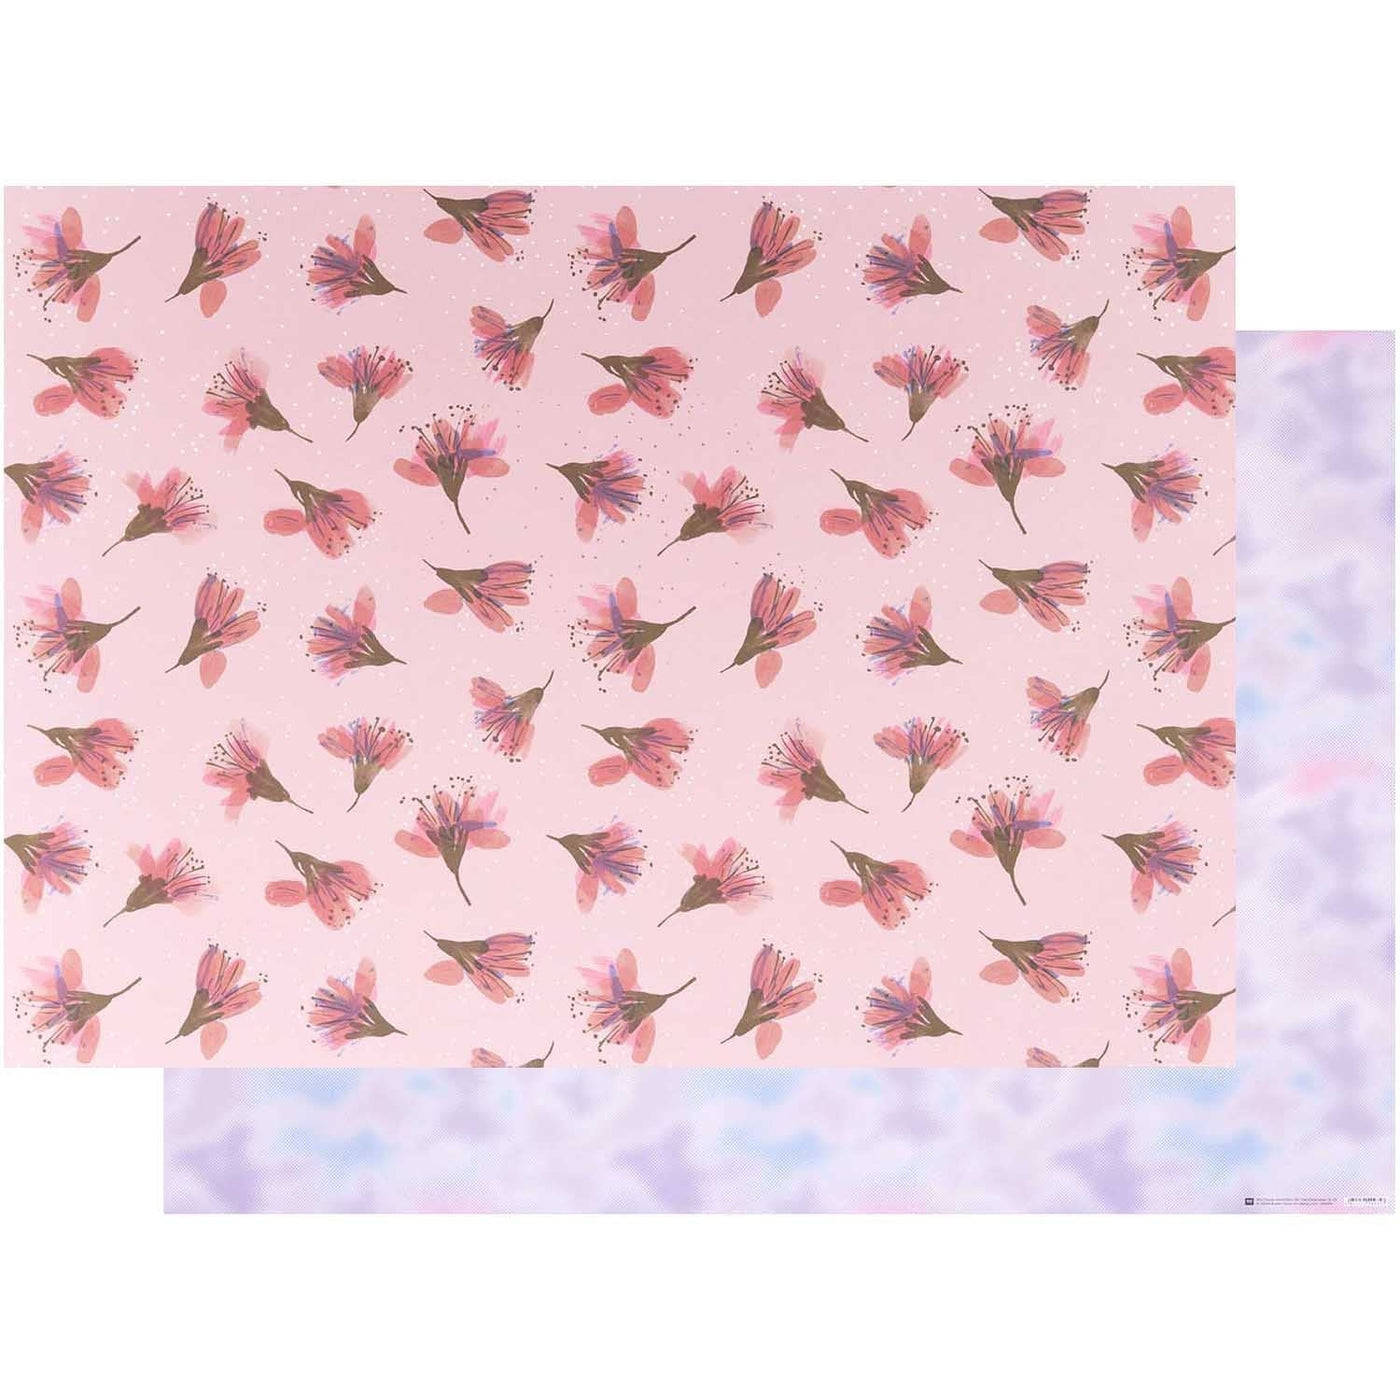 Cardboard Sheet - Cherry Blossom - Staff Only